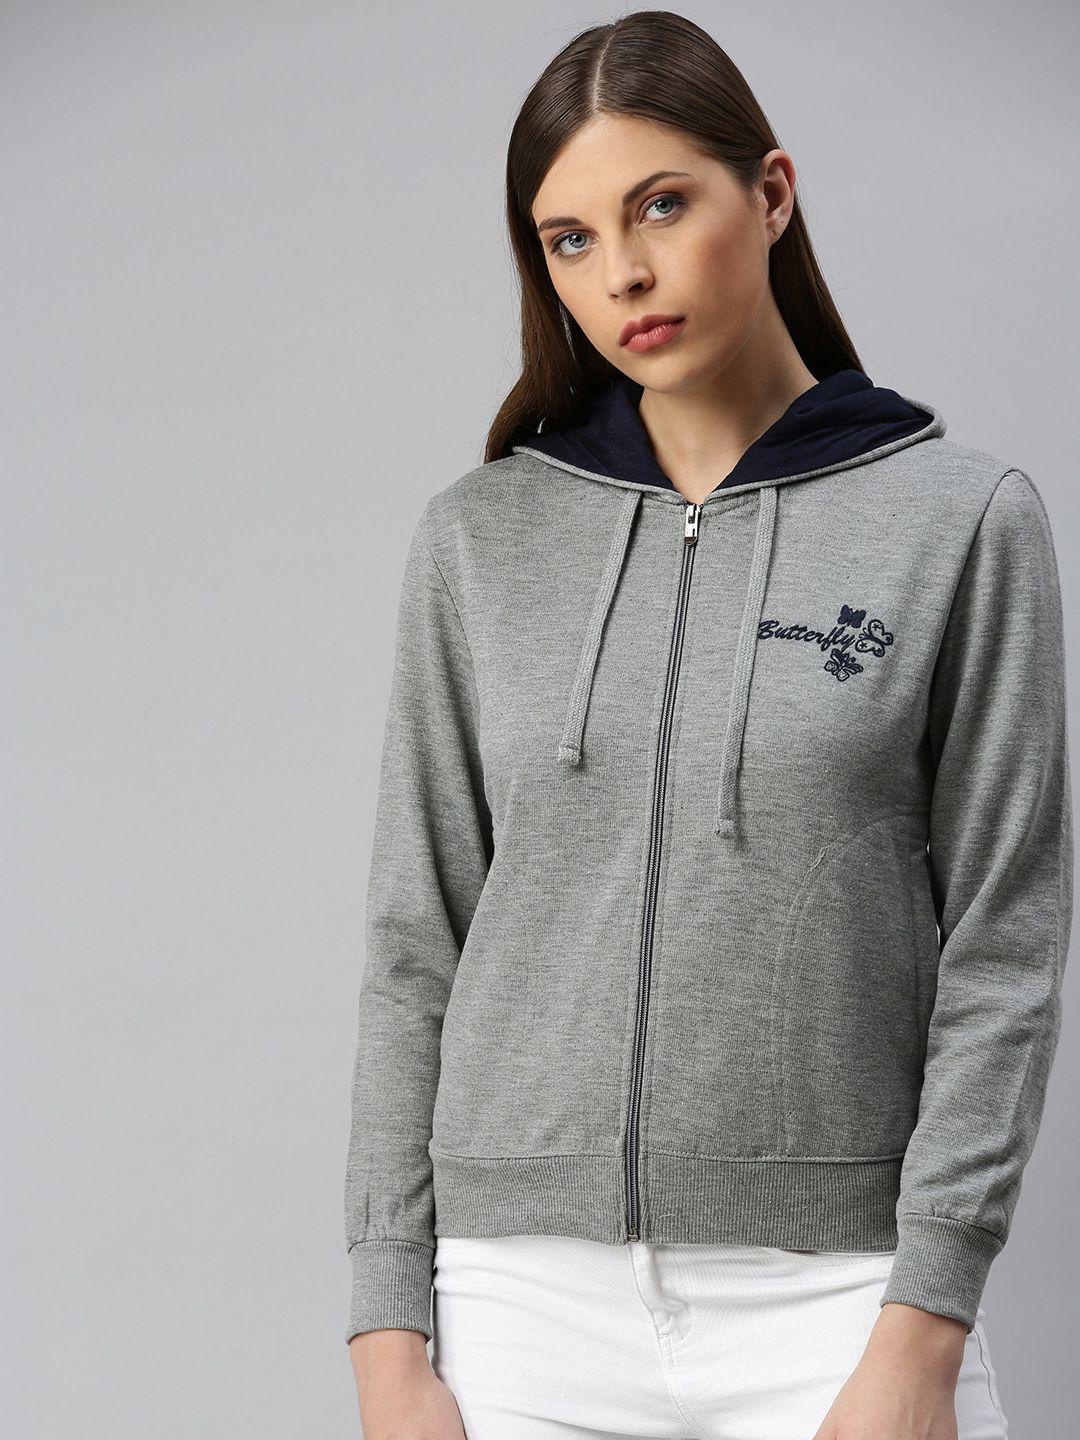 adbucks-women-grey-solid-hooded-sweatshirt